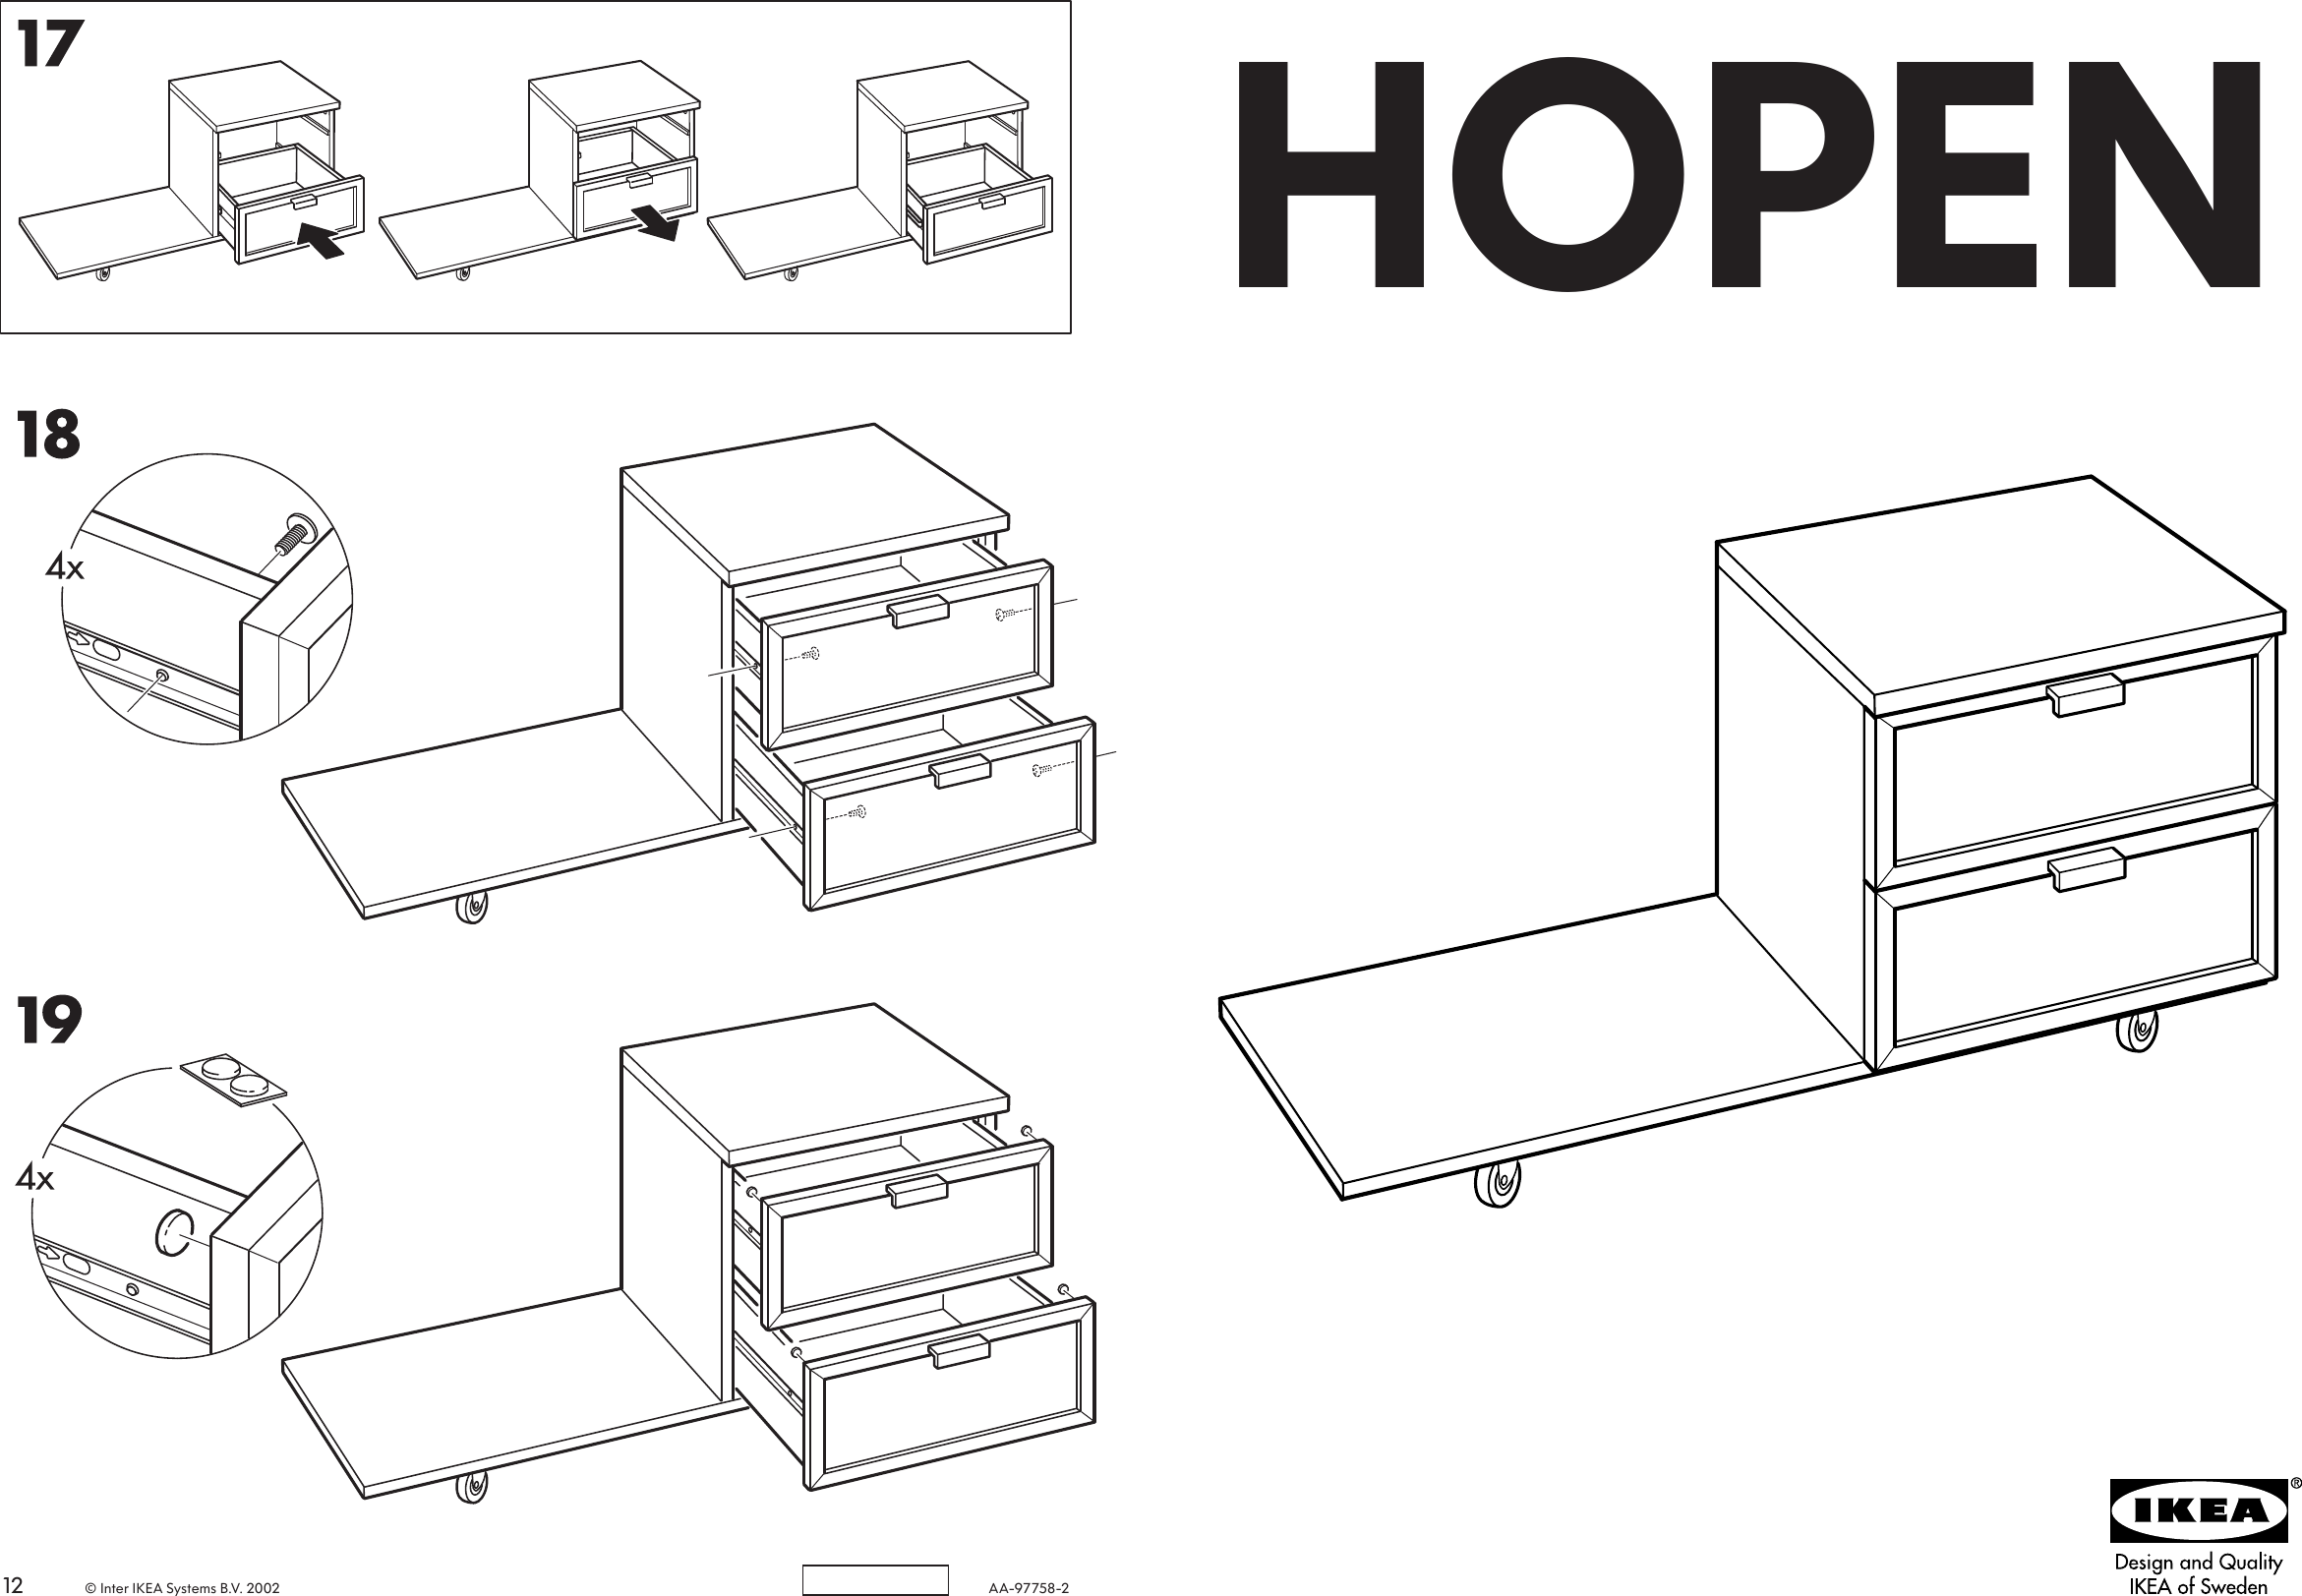 Ikea Hopen Bedside Table 39x17 Assembly Instruction